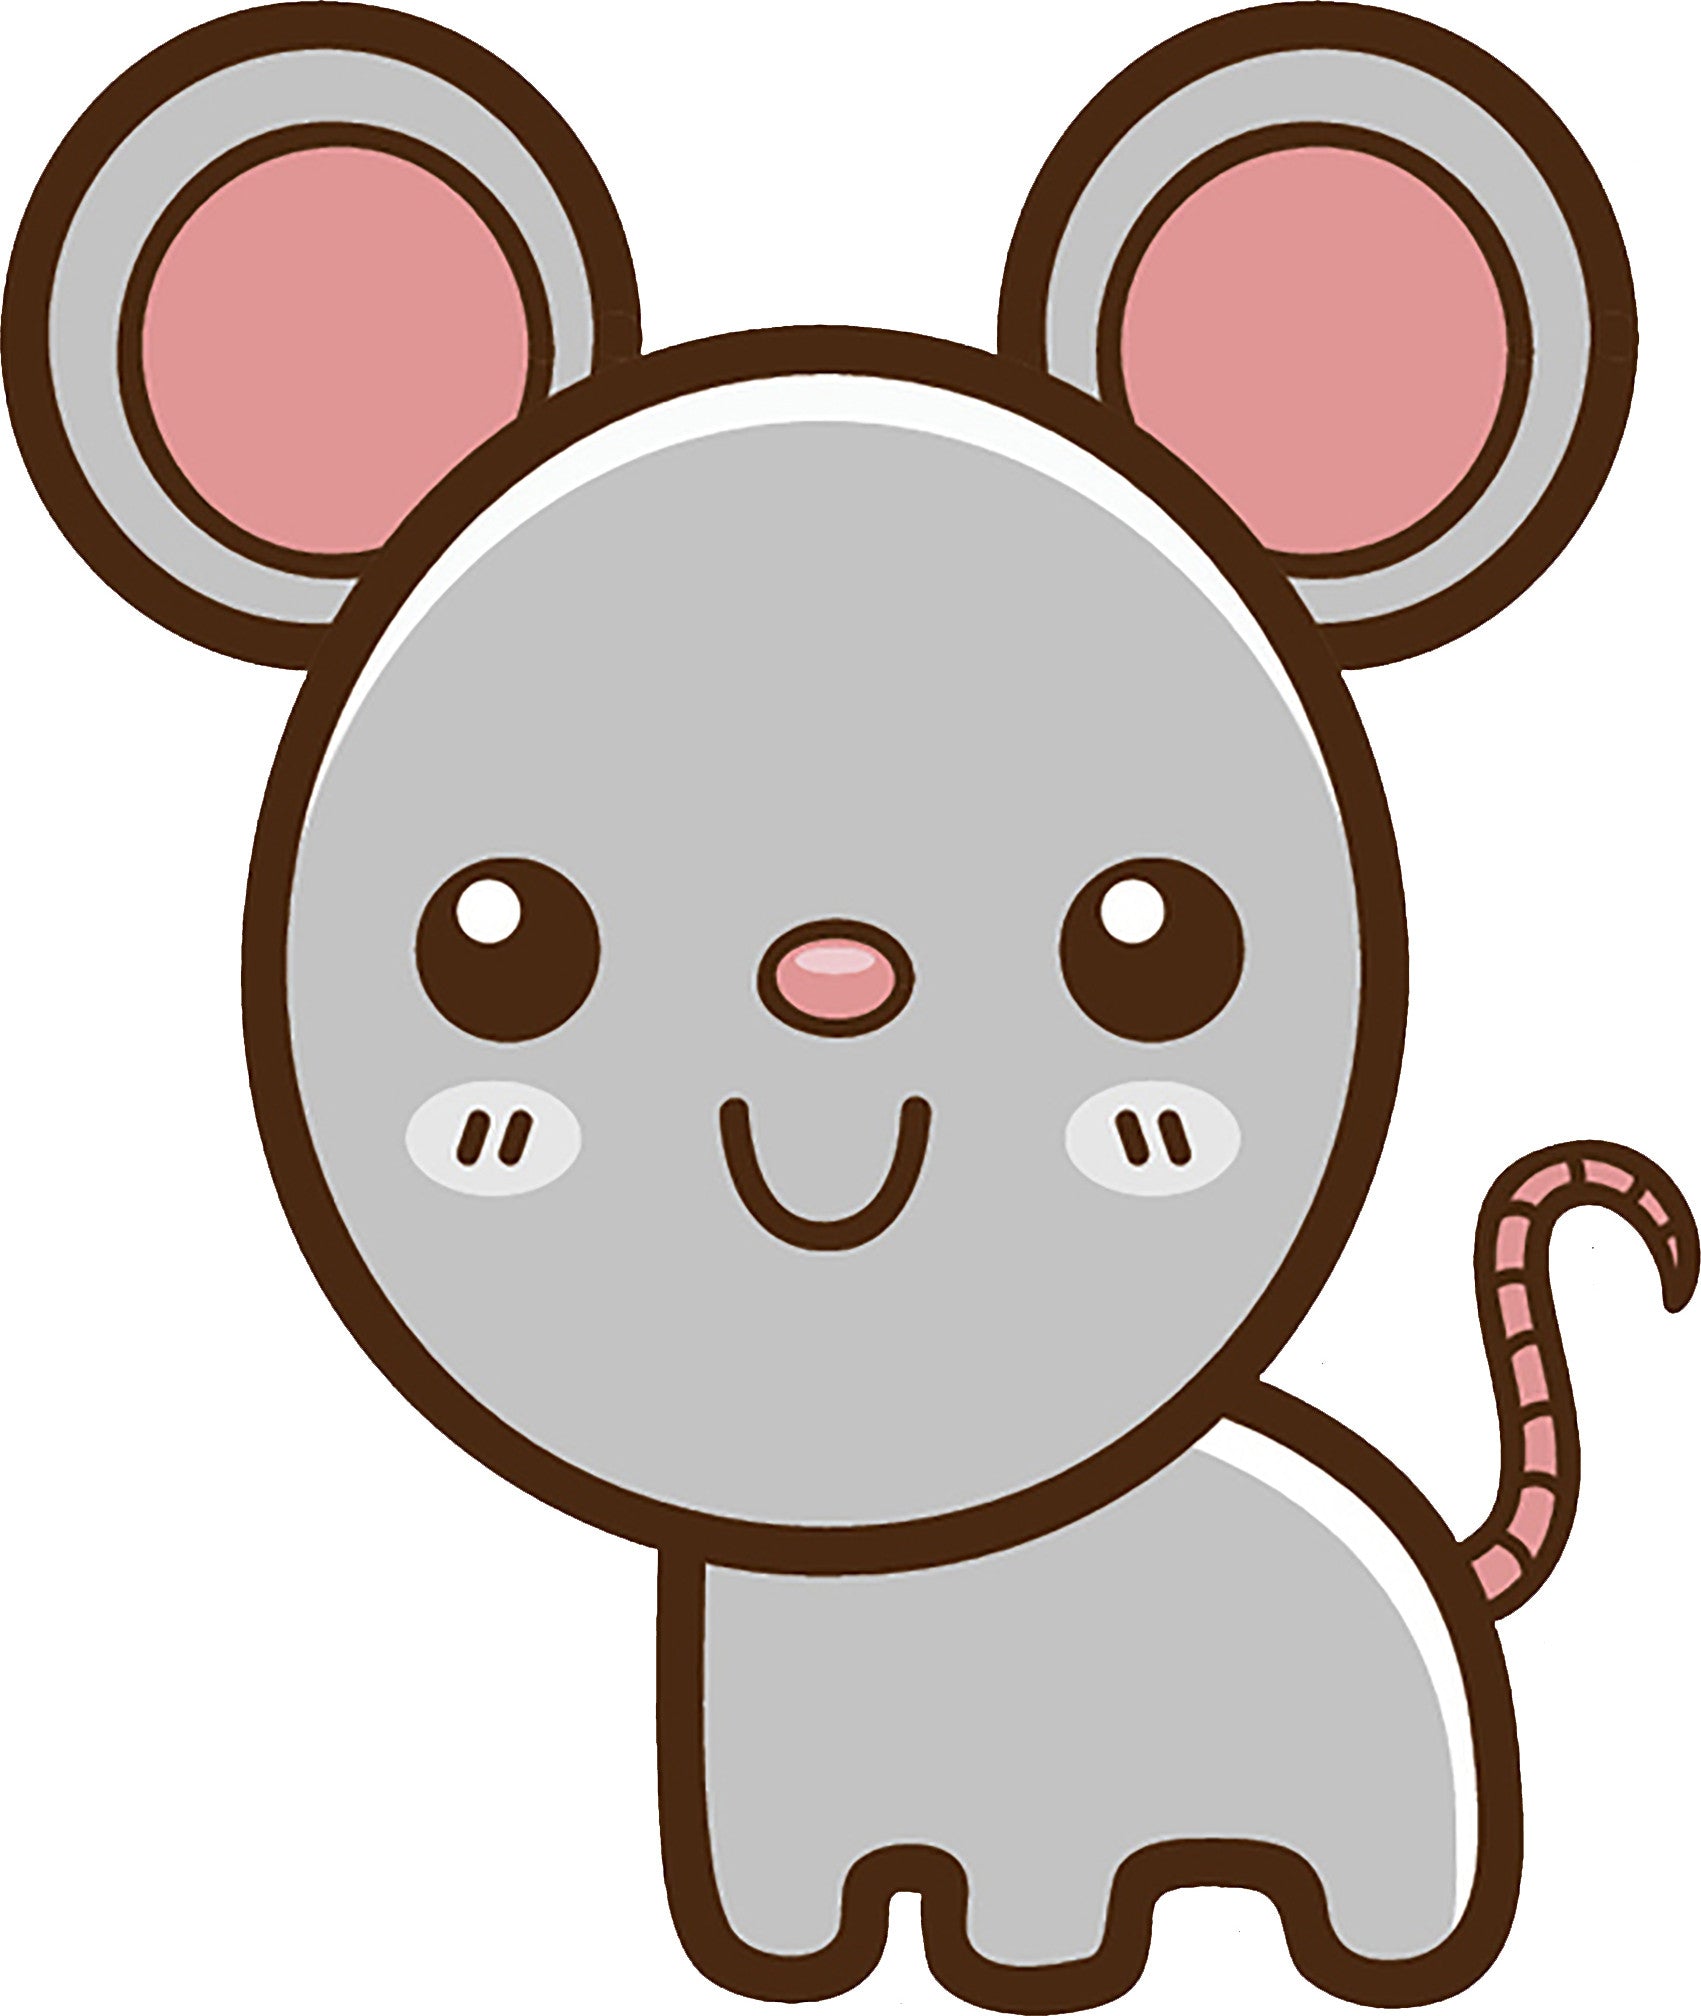 Cute Simple Kawaii Animal Cartoon Icon - Mouse Vinyl Decal Sticker